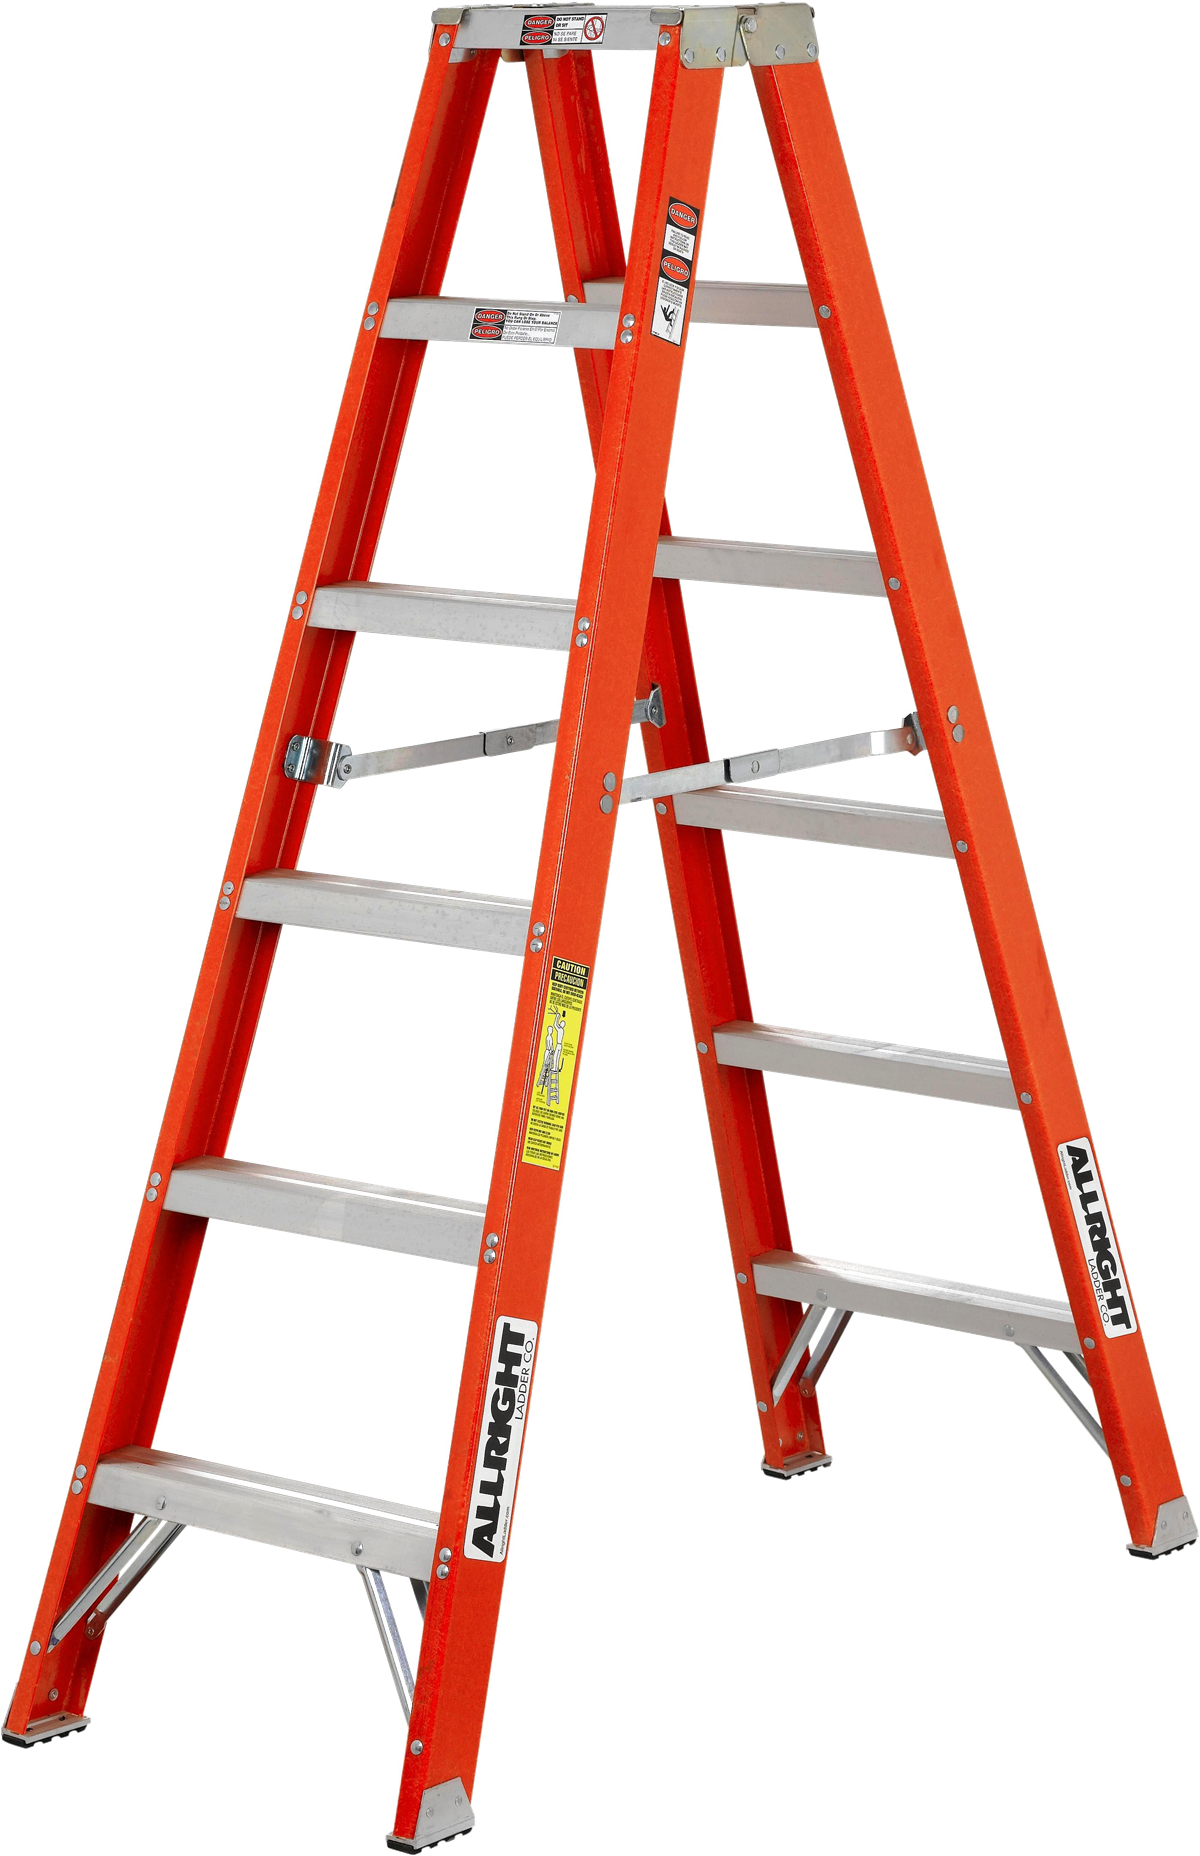 Ladder Free PNG Image | PNG Arts